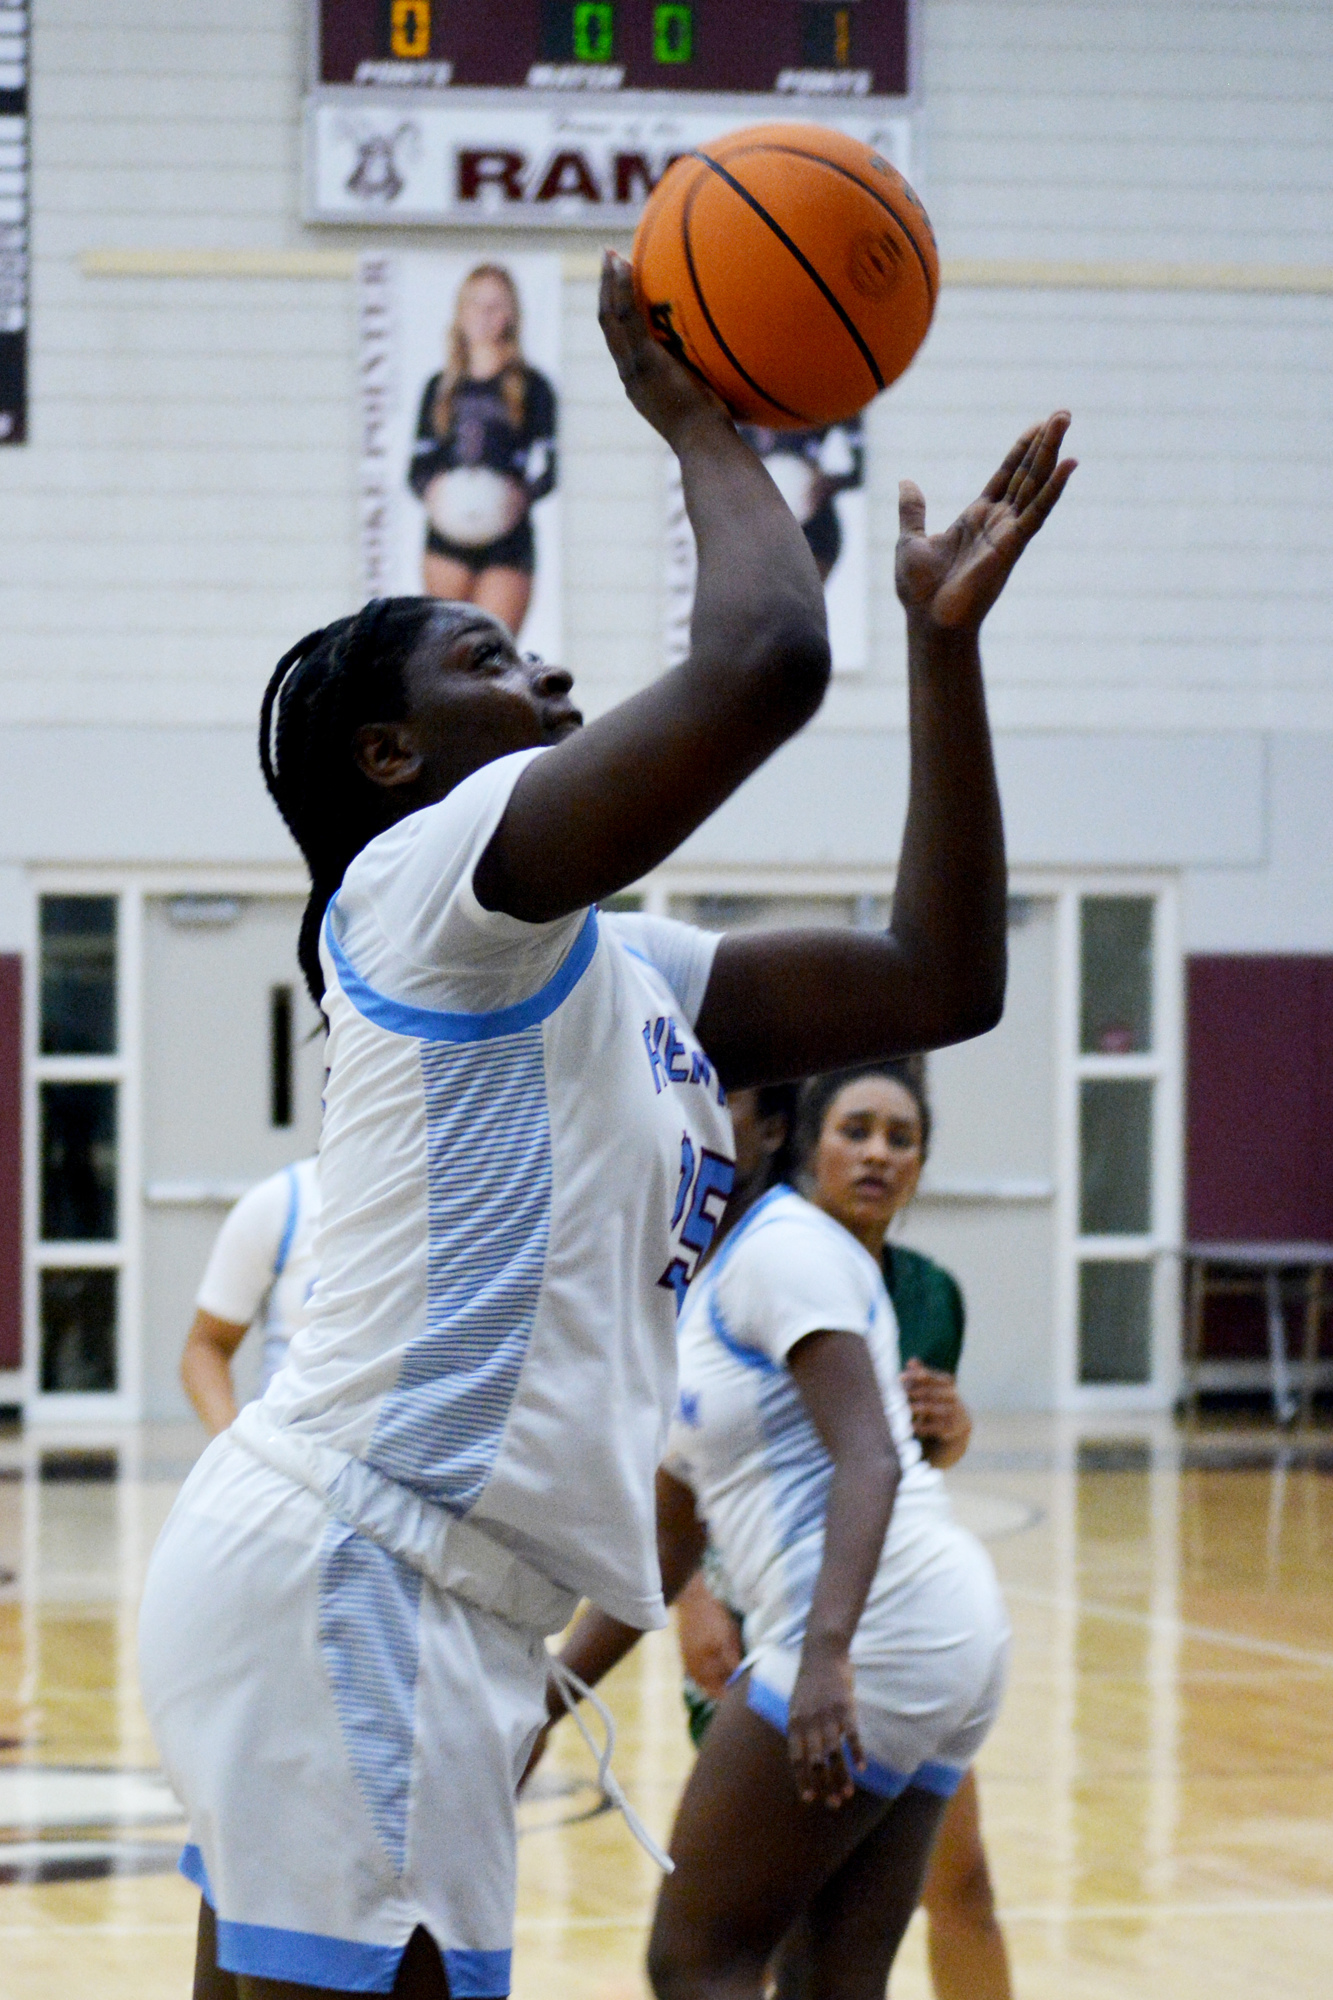 Jaida Cunningham transferred to the Riverview High girls team from Booker High. (Photo by Ryan Kohn.)